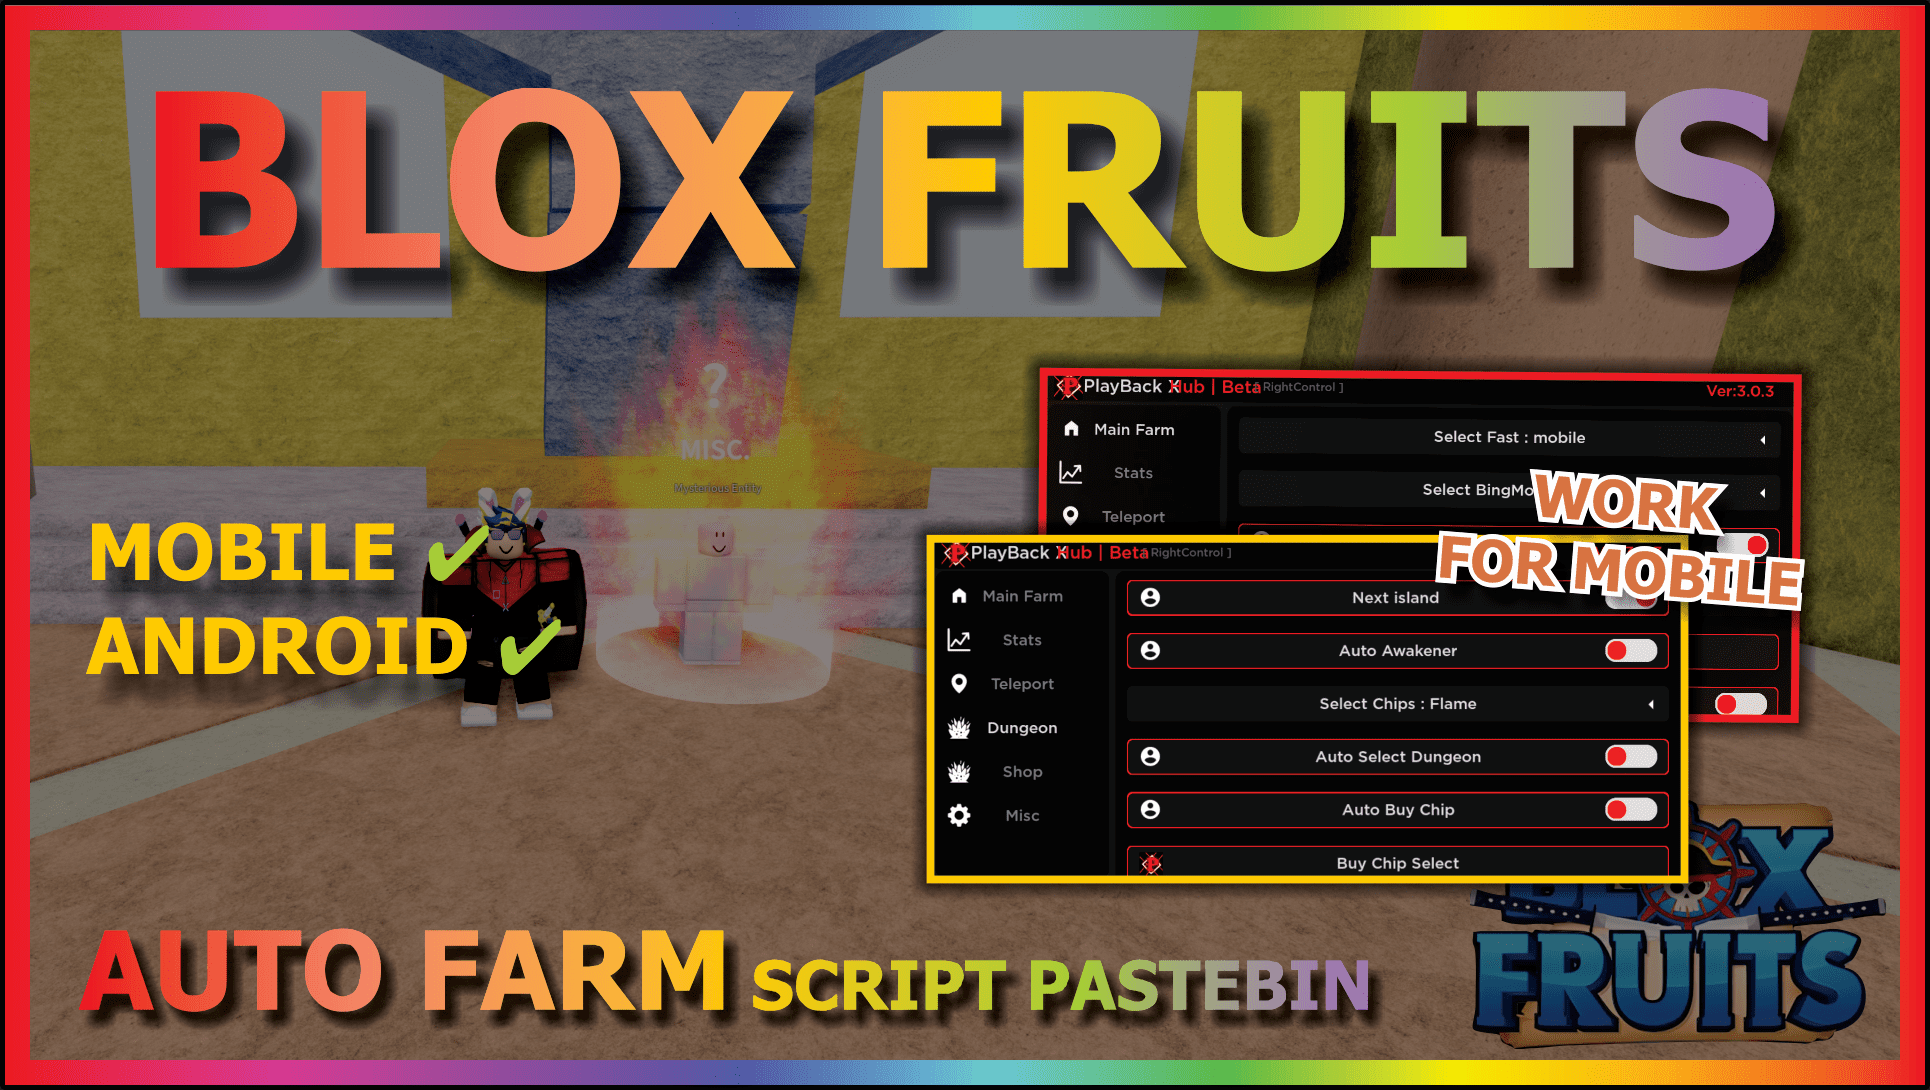 ROBLOX blox fruits script, auto cdk, auto farm and much more for mob